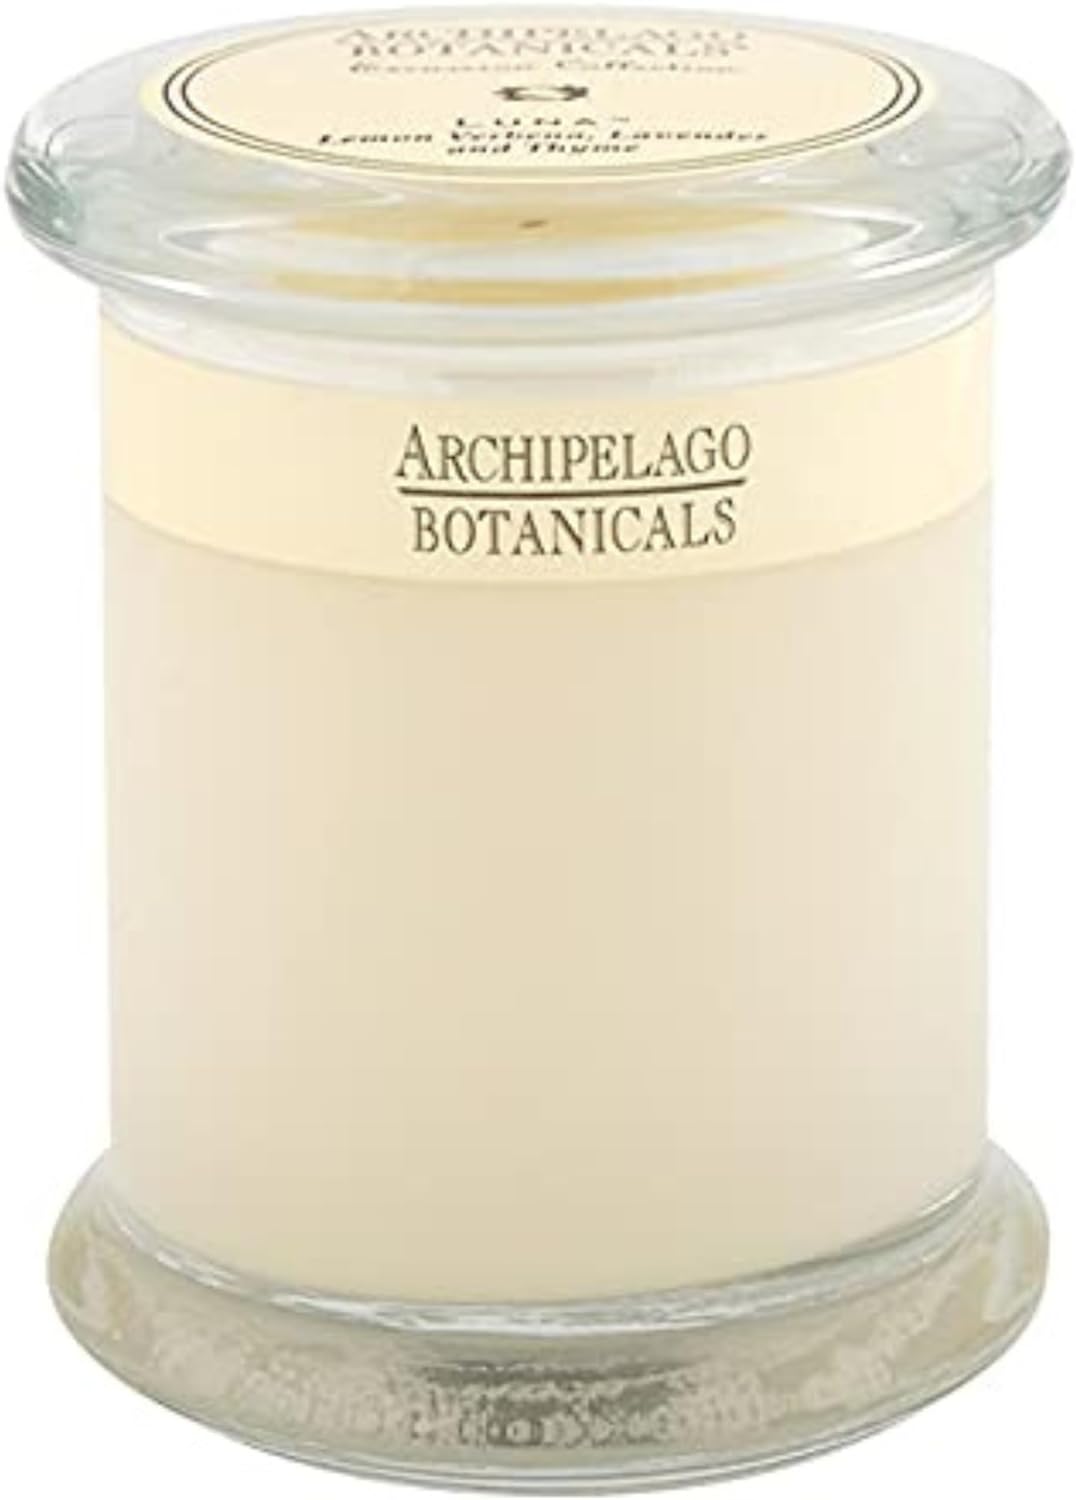 Archipelago Botanicals Luna Glass Jar Candle, Lemon Verbena, Lavender and Thyme Scent, Lead-Free Candle Wicks, Burns Approx. 60 Hours (8.6 oz)